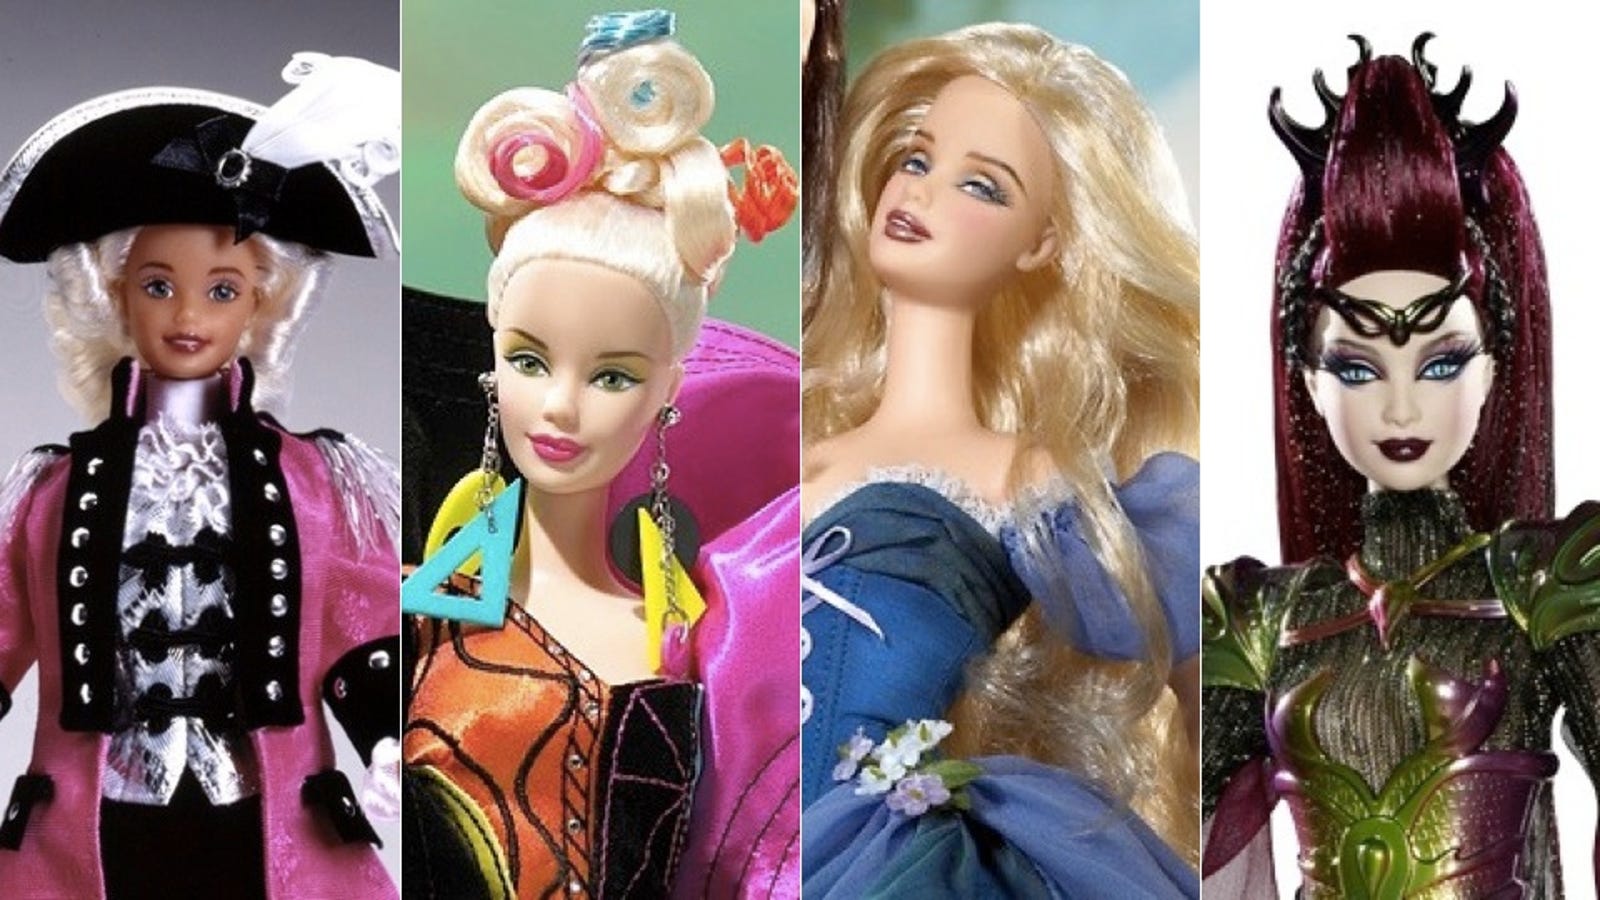 20 Weird, Insane And Extremely Disturbing Barbie Dolls